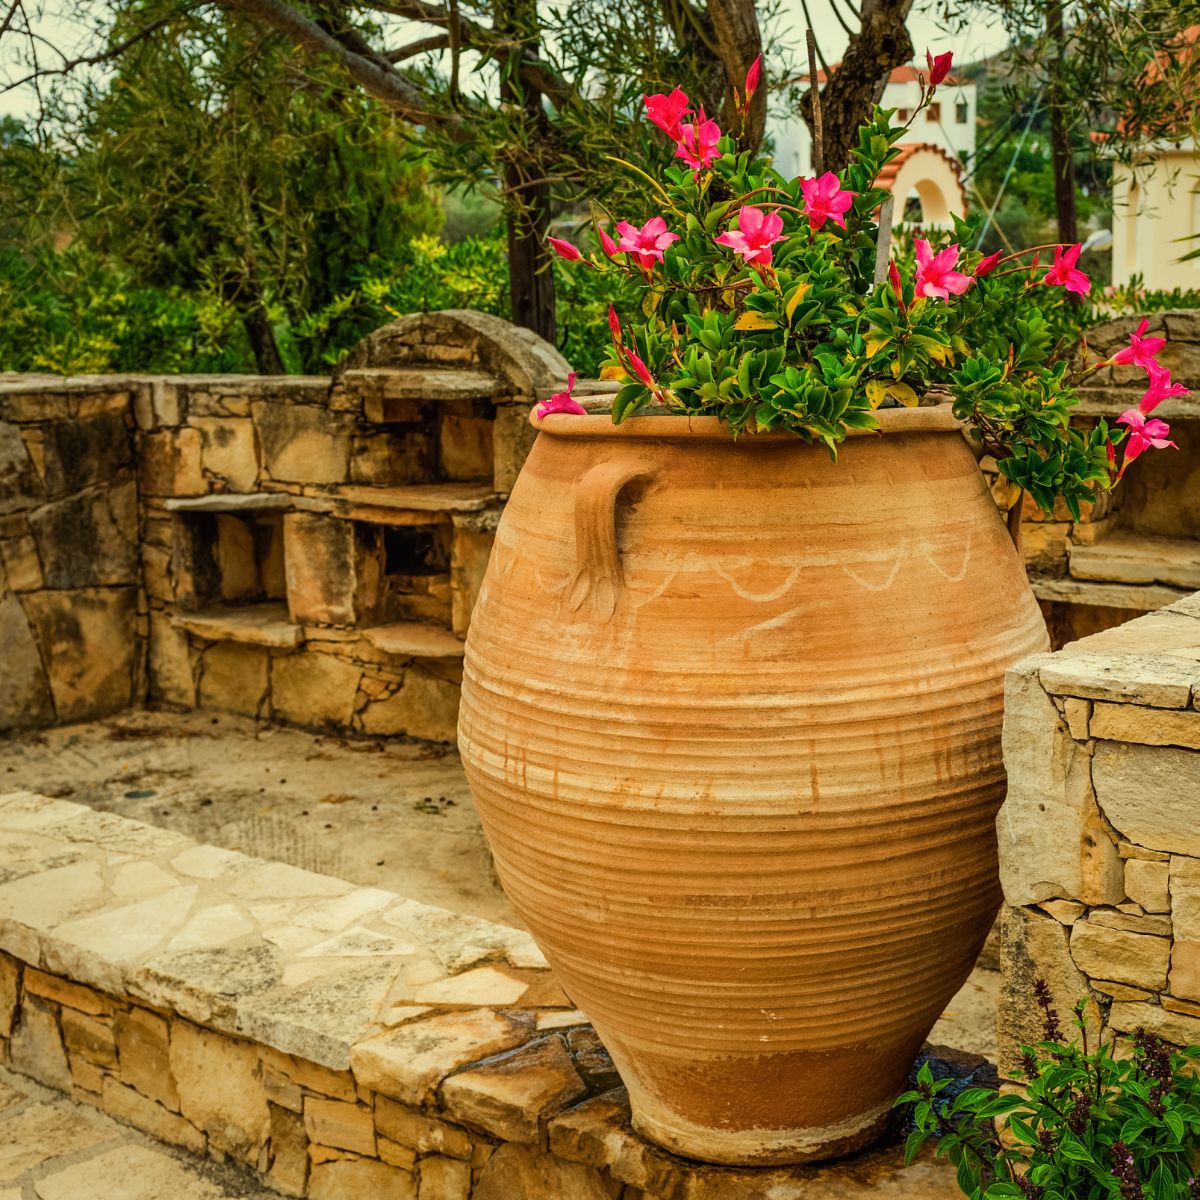 How to Create a Mediterranean-style Garden